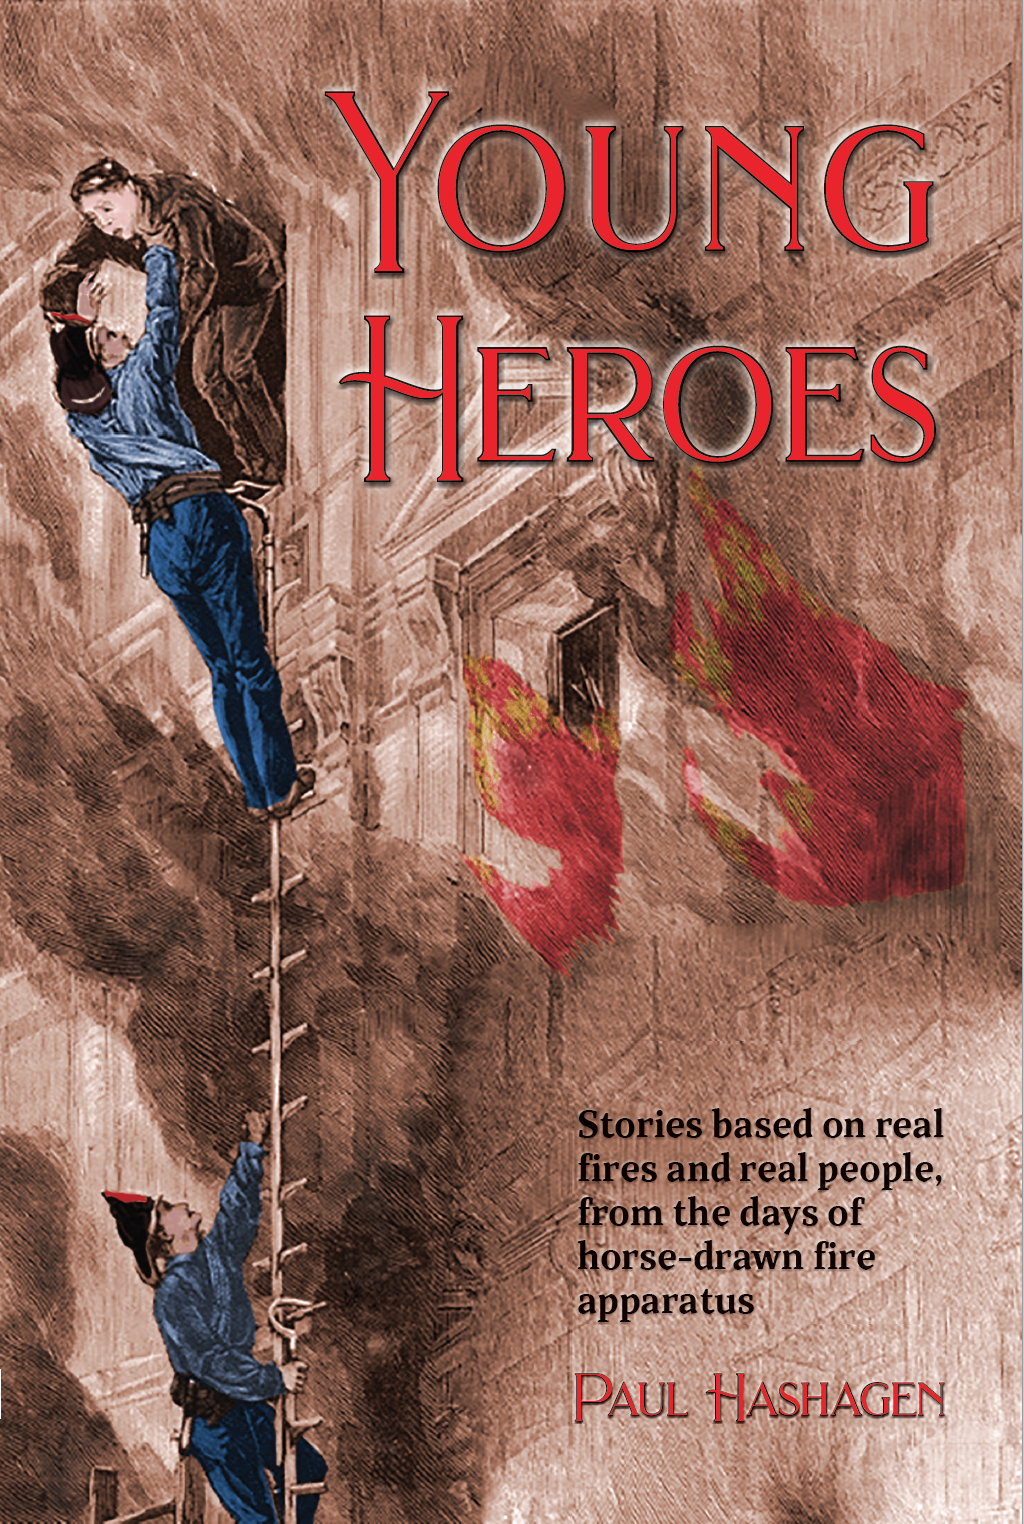 Young Heroes by Paul Hashagen